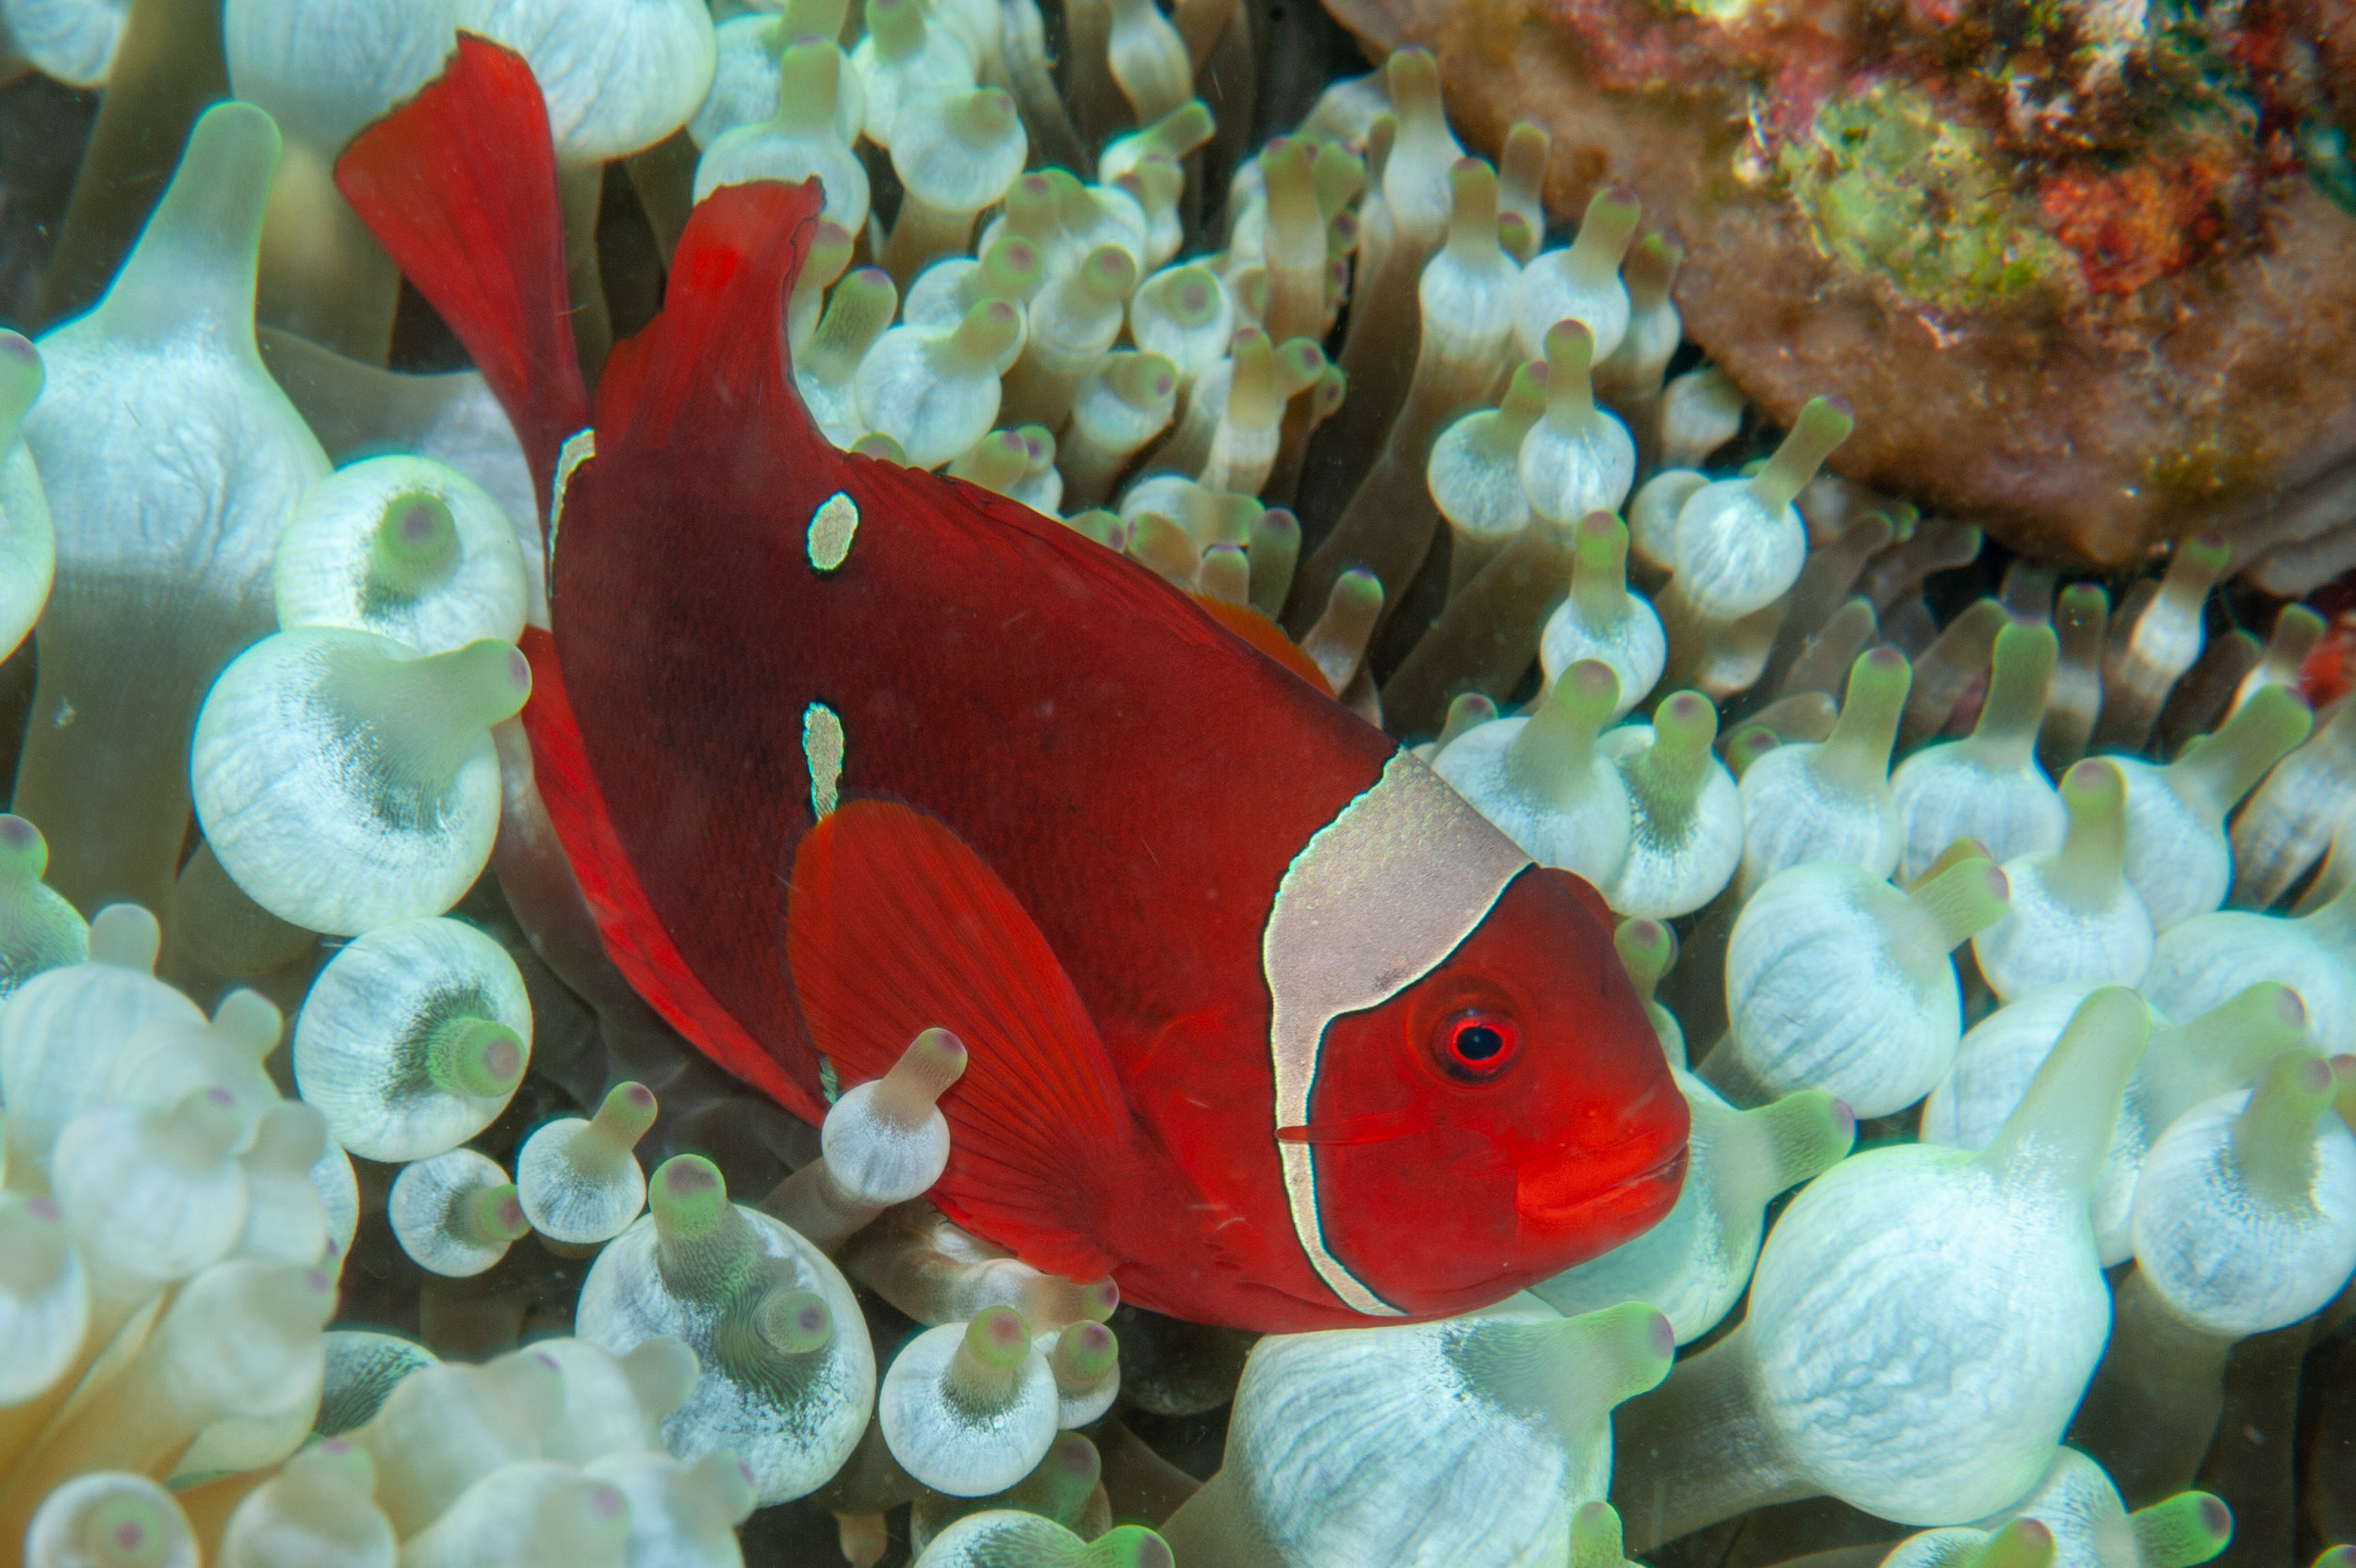 Spinecheek anemonefish - Premmas biaculeatus, Ake's Reef, Father's Reefs